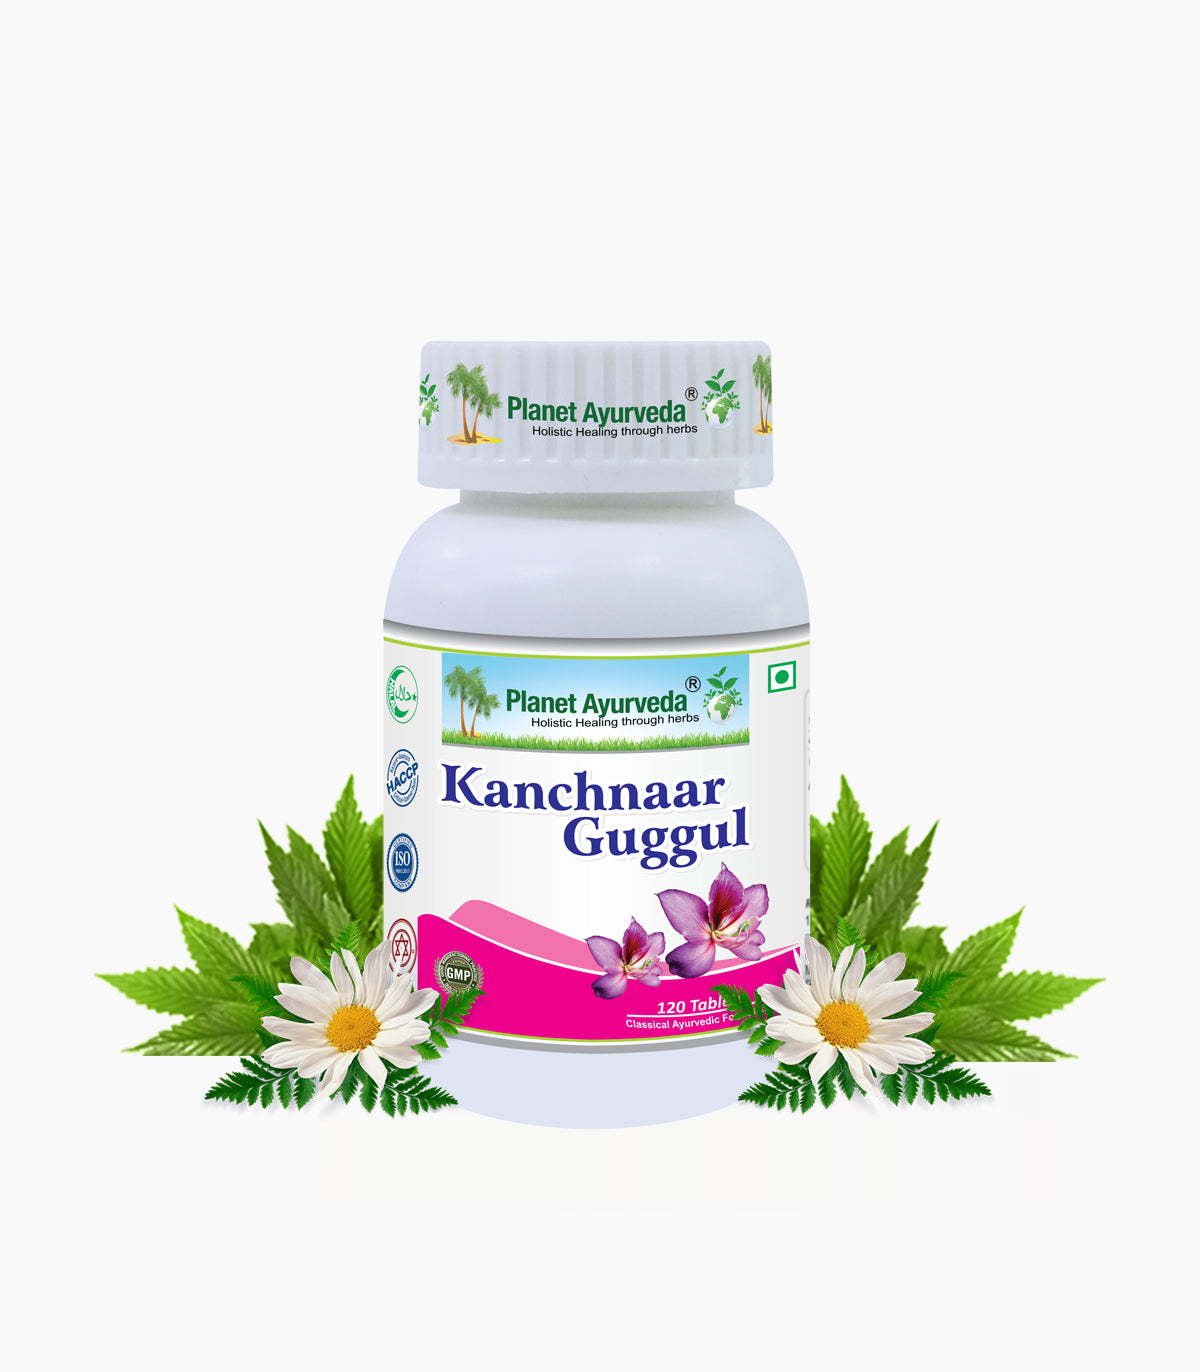 Kanchnaar Guggul Bottle of 120 Tablet